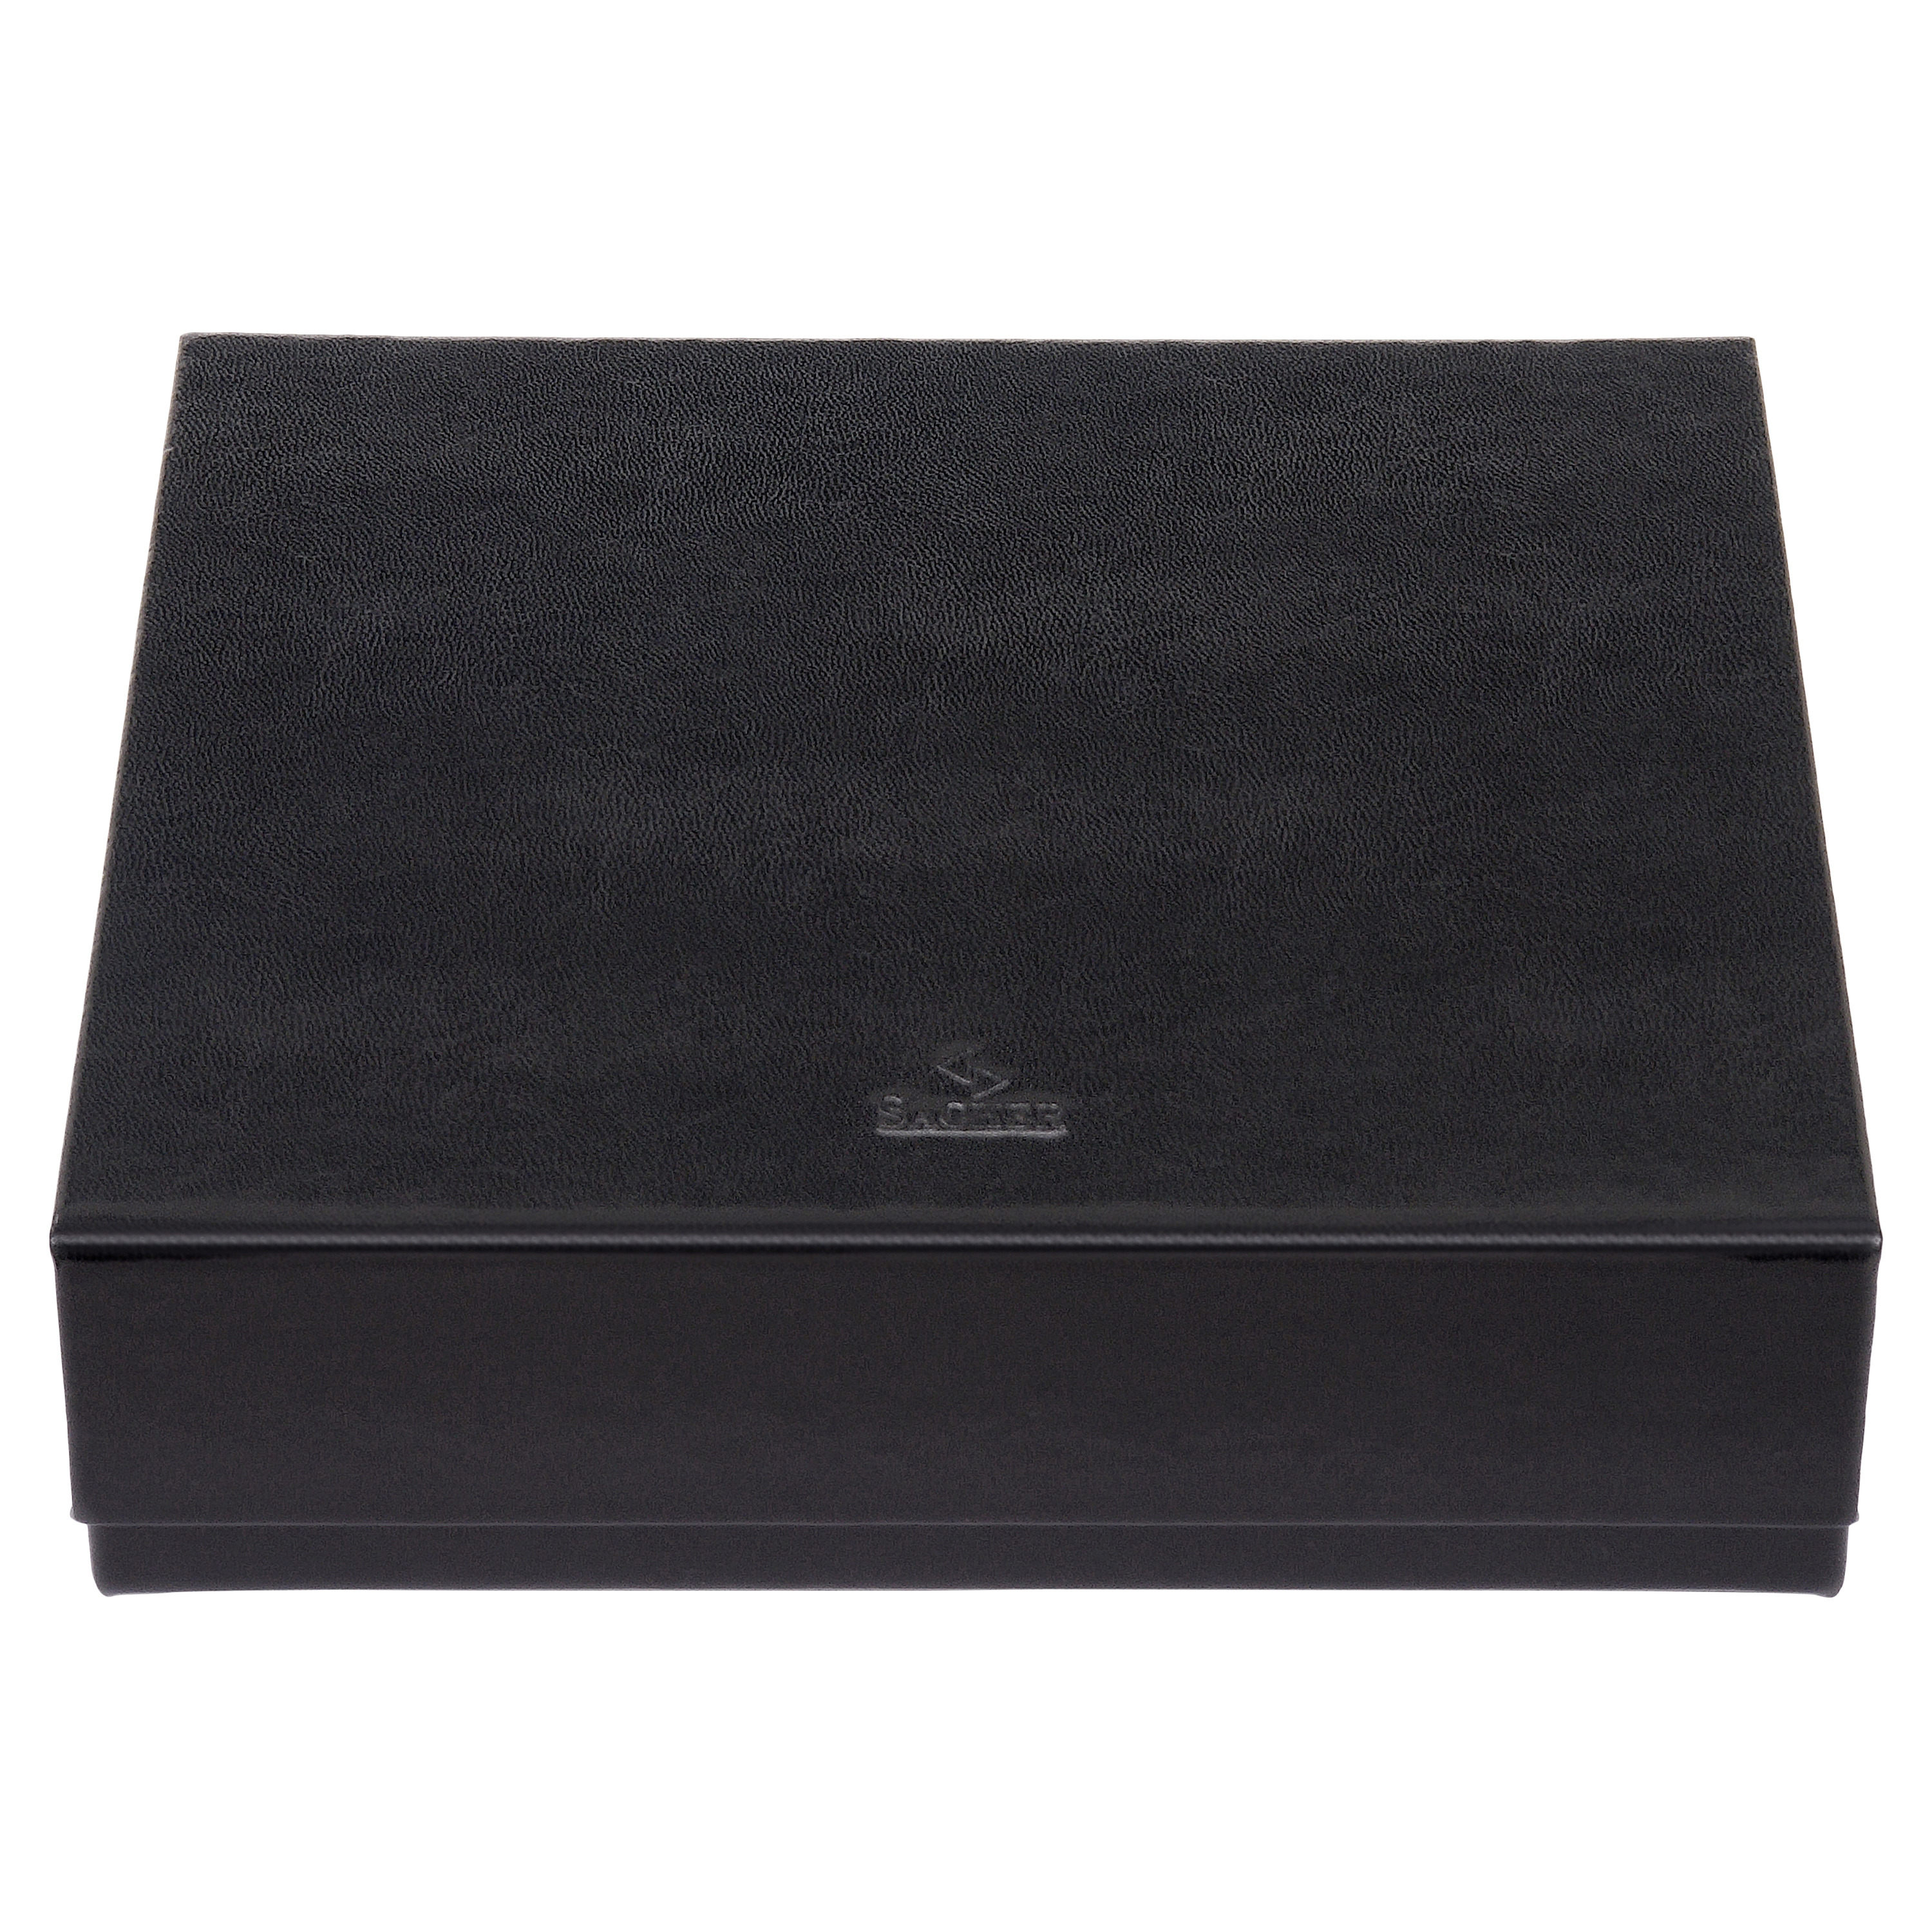 Nora new classic / black jewellery box